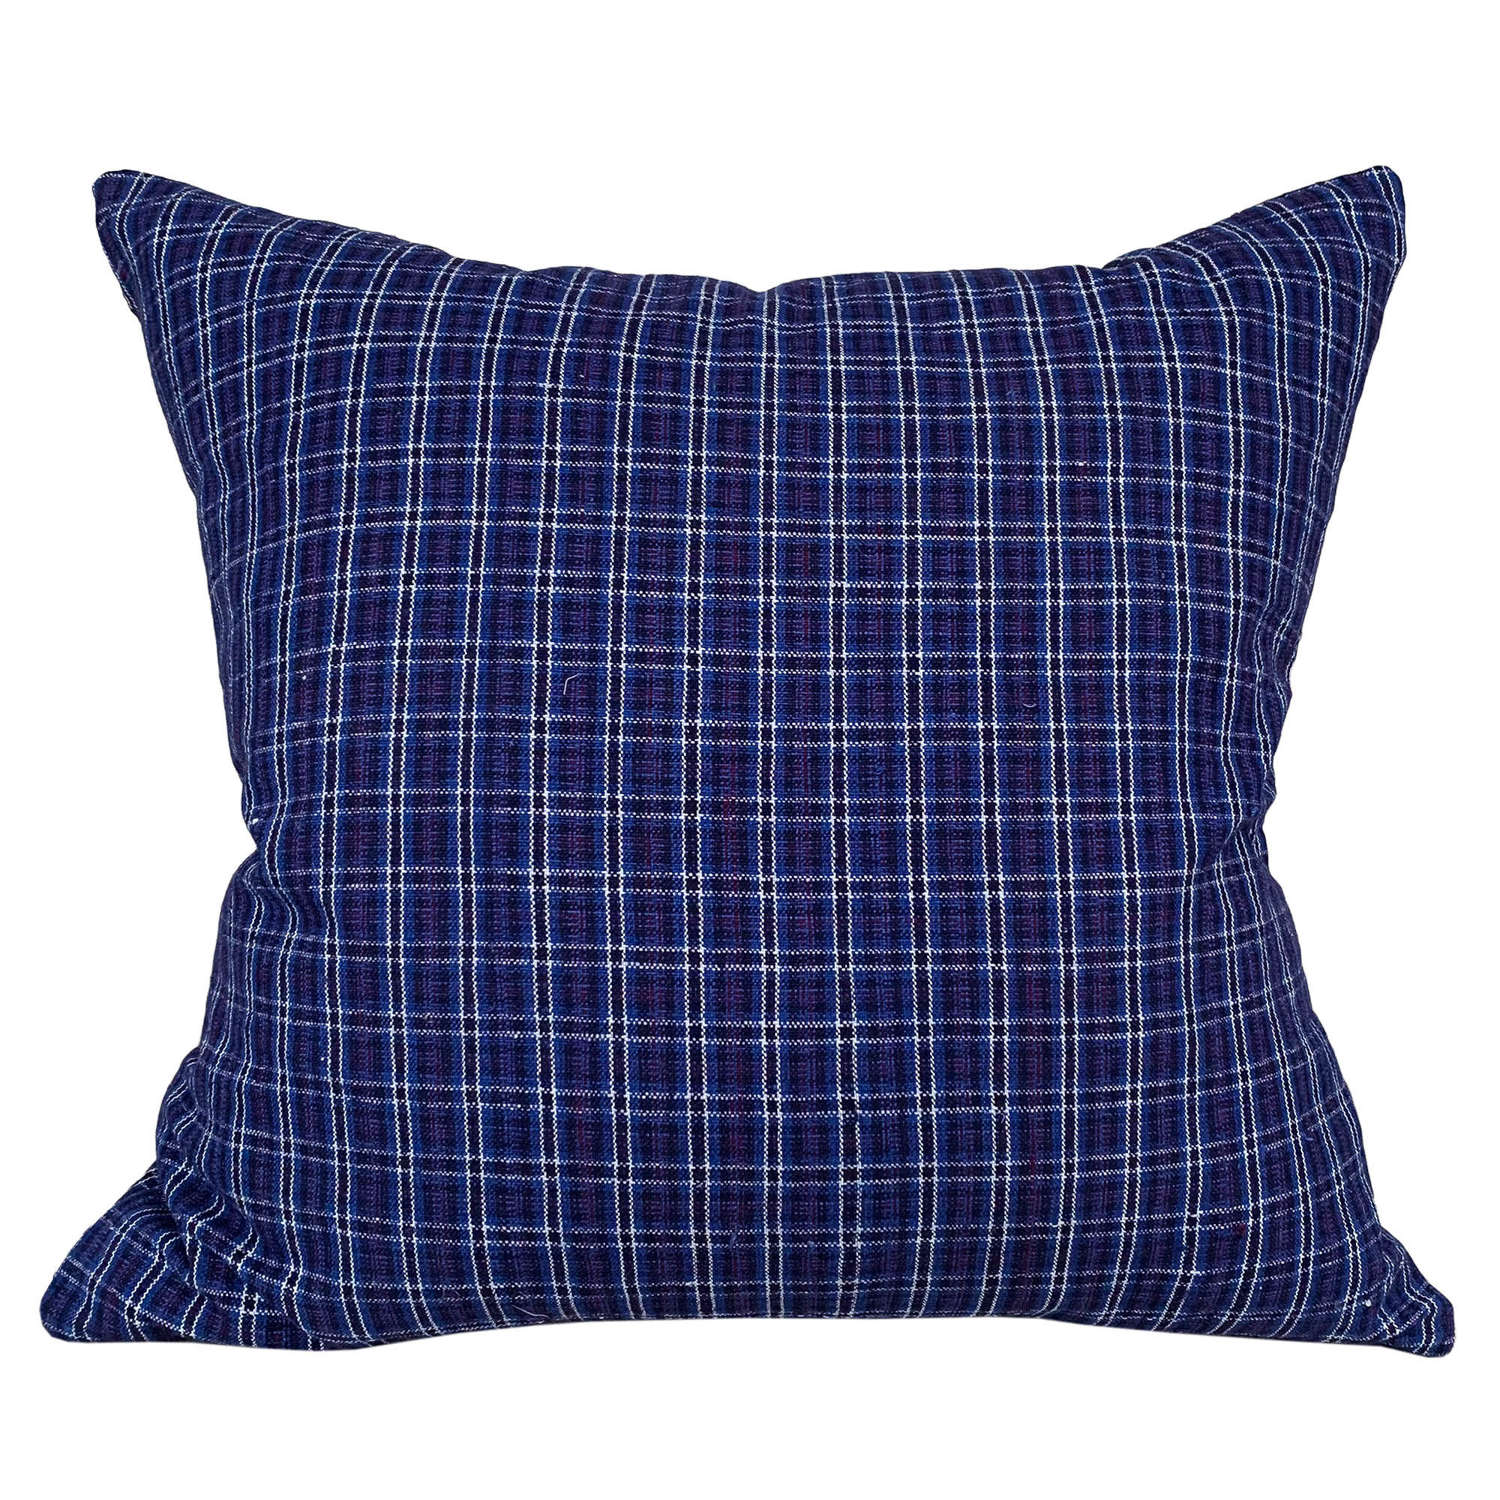 Songjiang Cushions, Blue Check